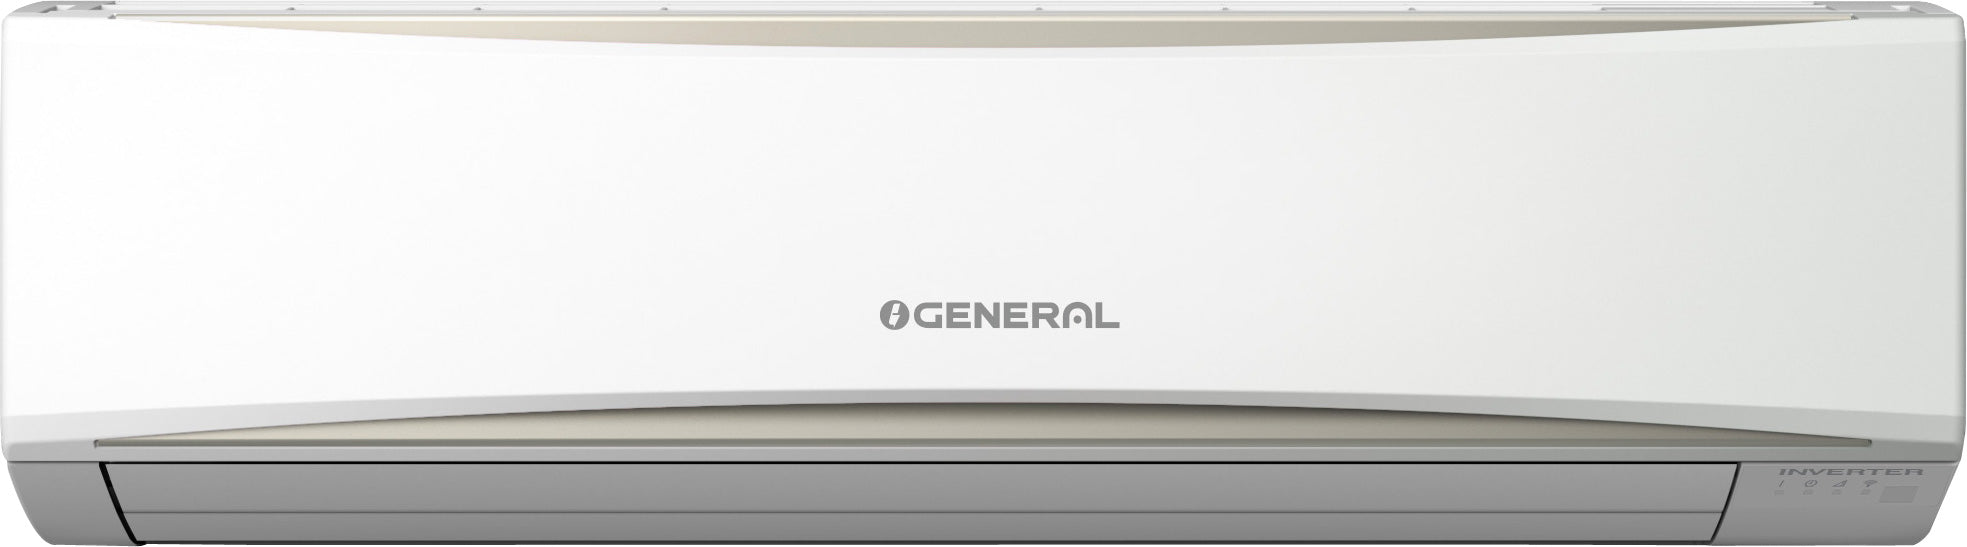 OGeneral CGT Series 2 Ton 5 Star - Inverter Split AC | Vijay Sales